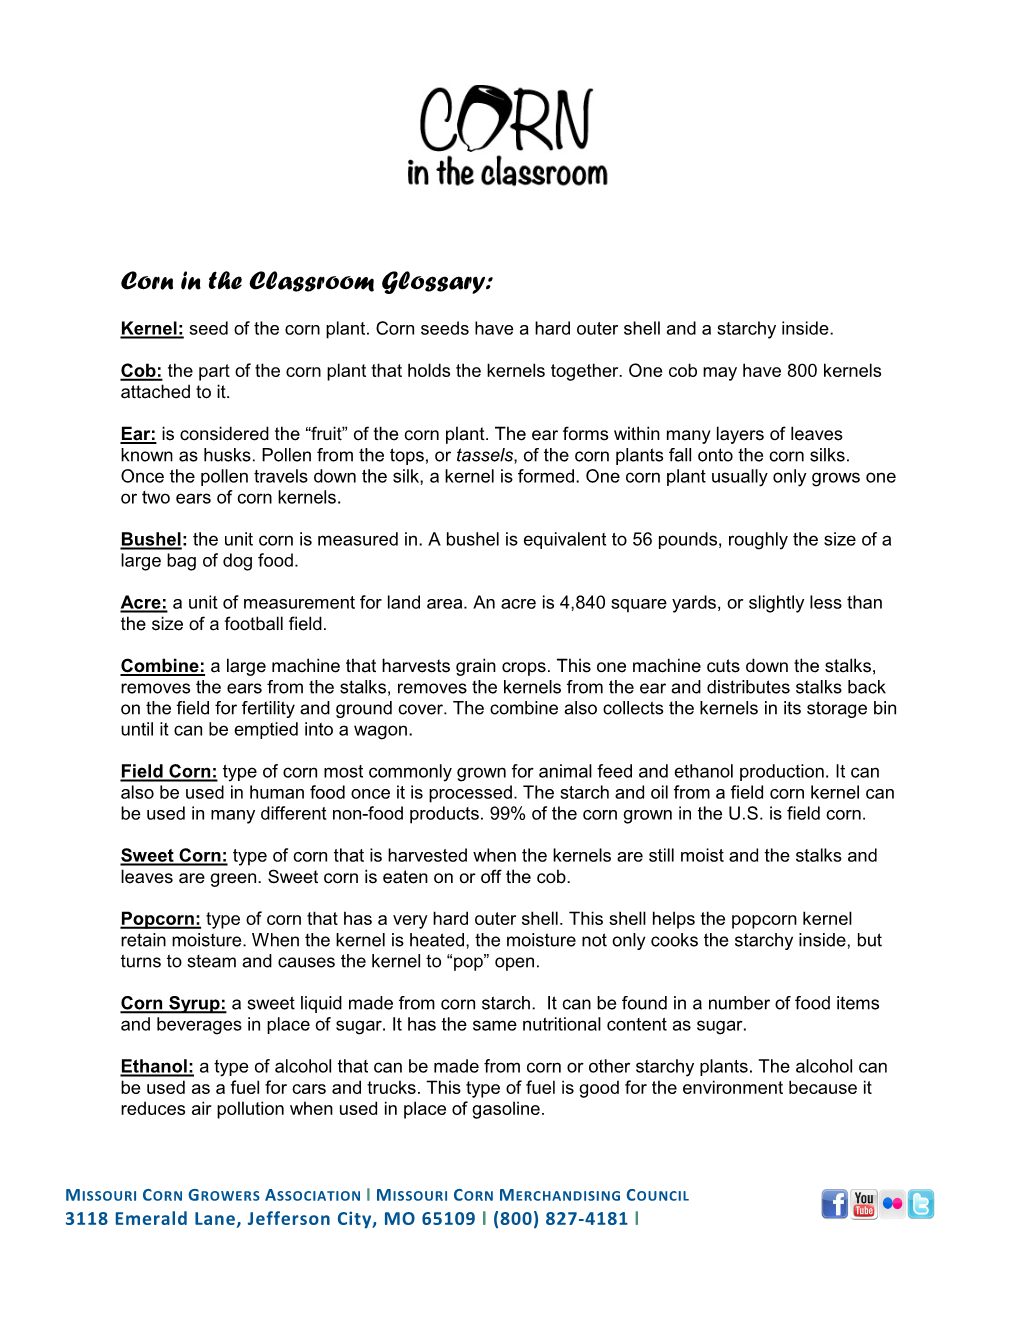 Corn in the Classroom Glossary